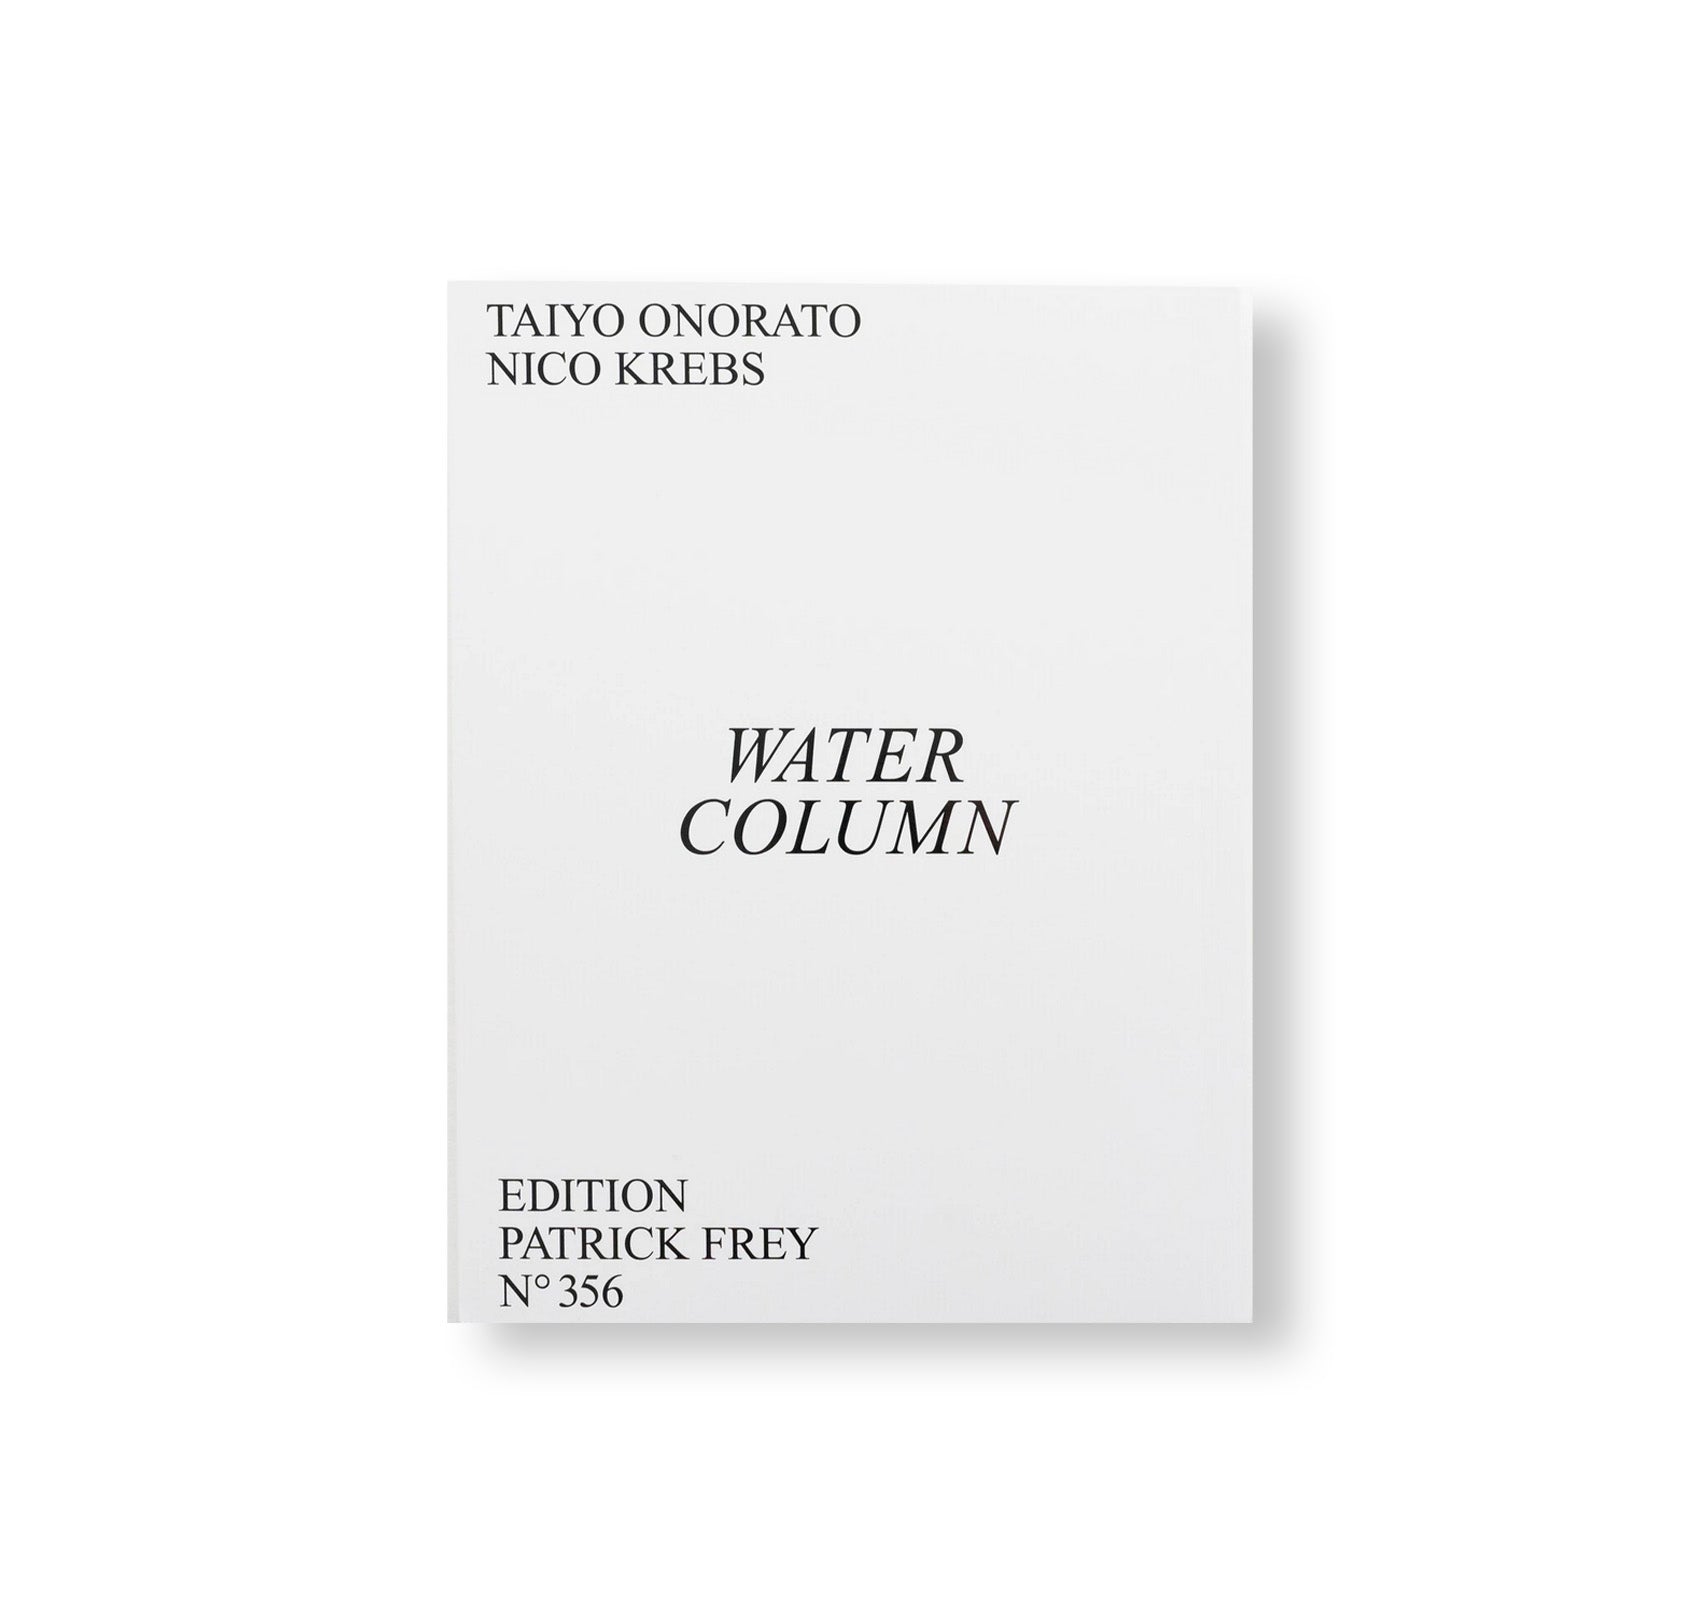 WATER COLUMN by Taiyo Onorato, Nico Krebs